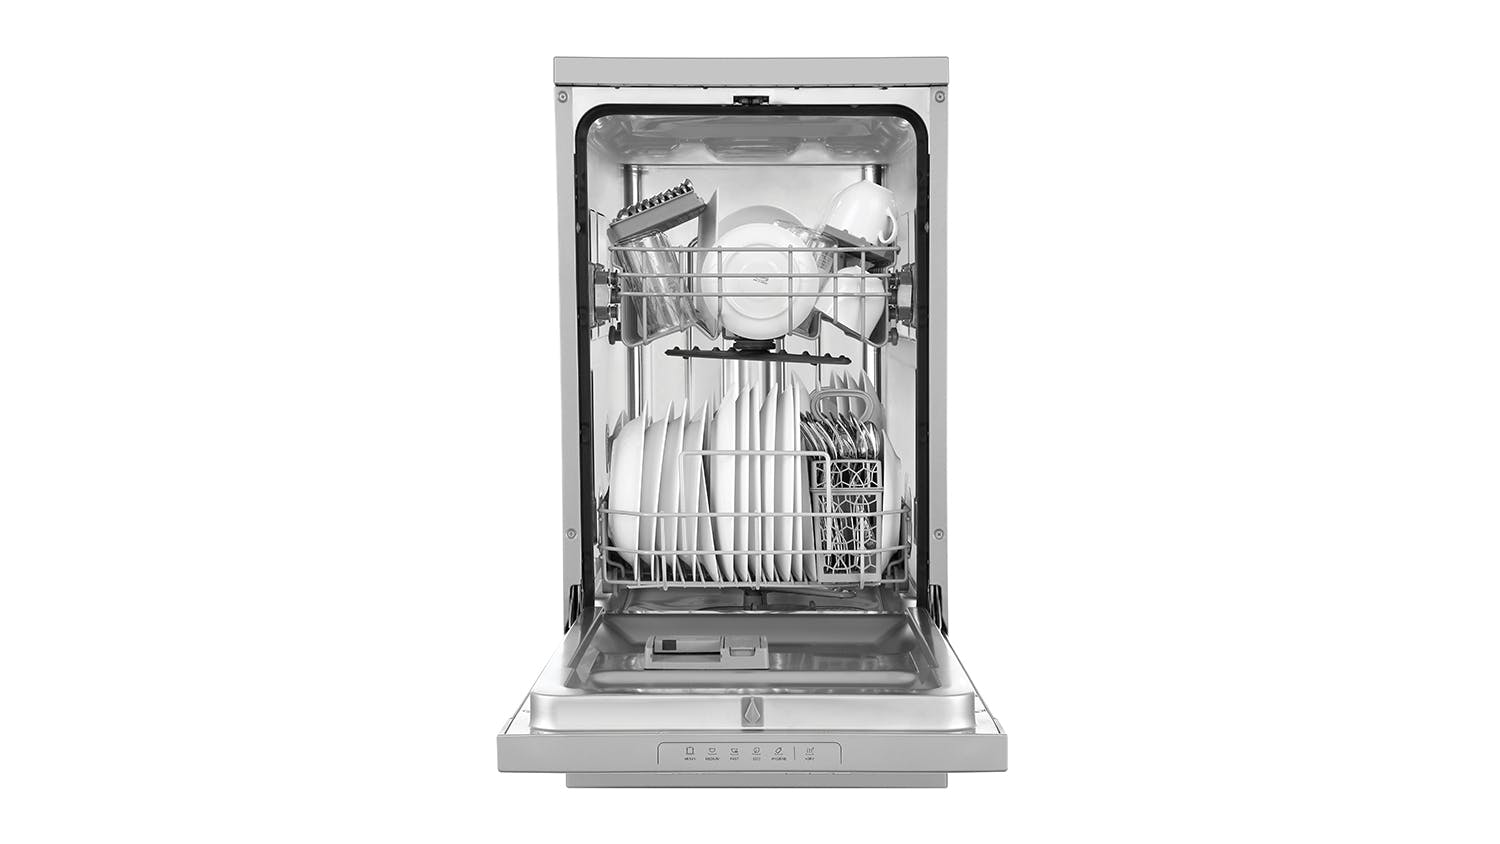 Haier 10 Place Setting 5 Program Slim Freestanding Dishwasher - Silver (HDW10F1S1)